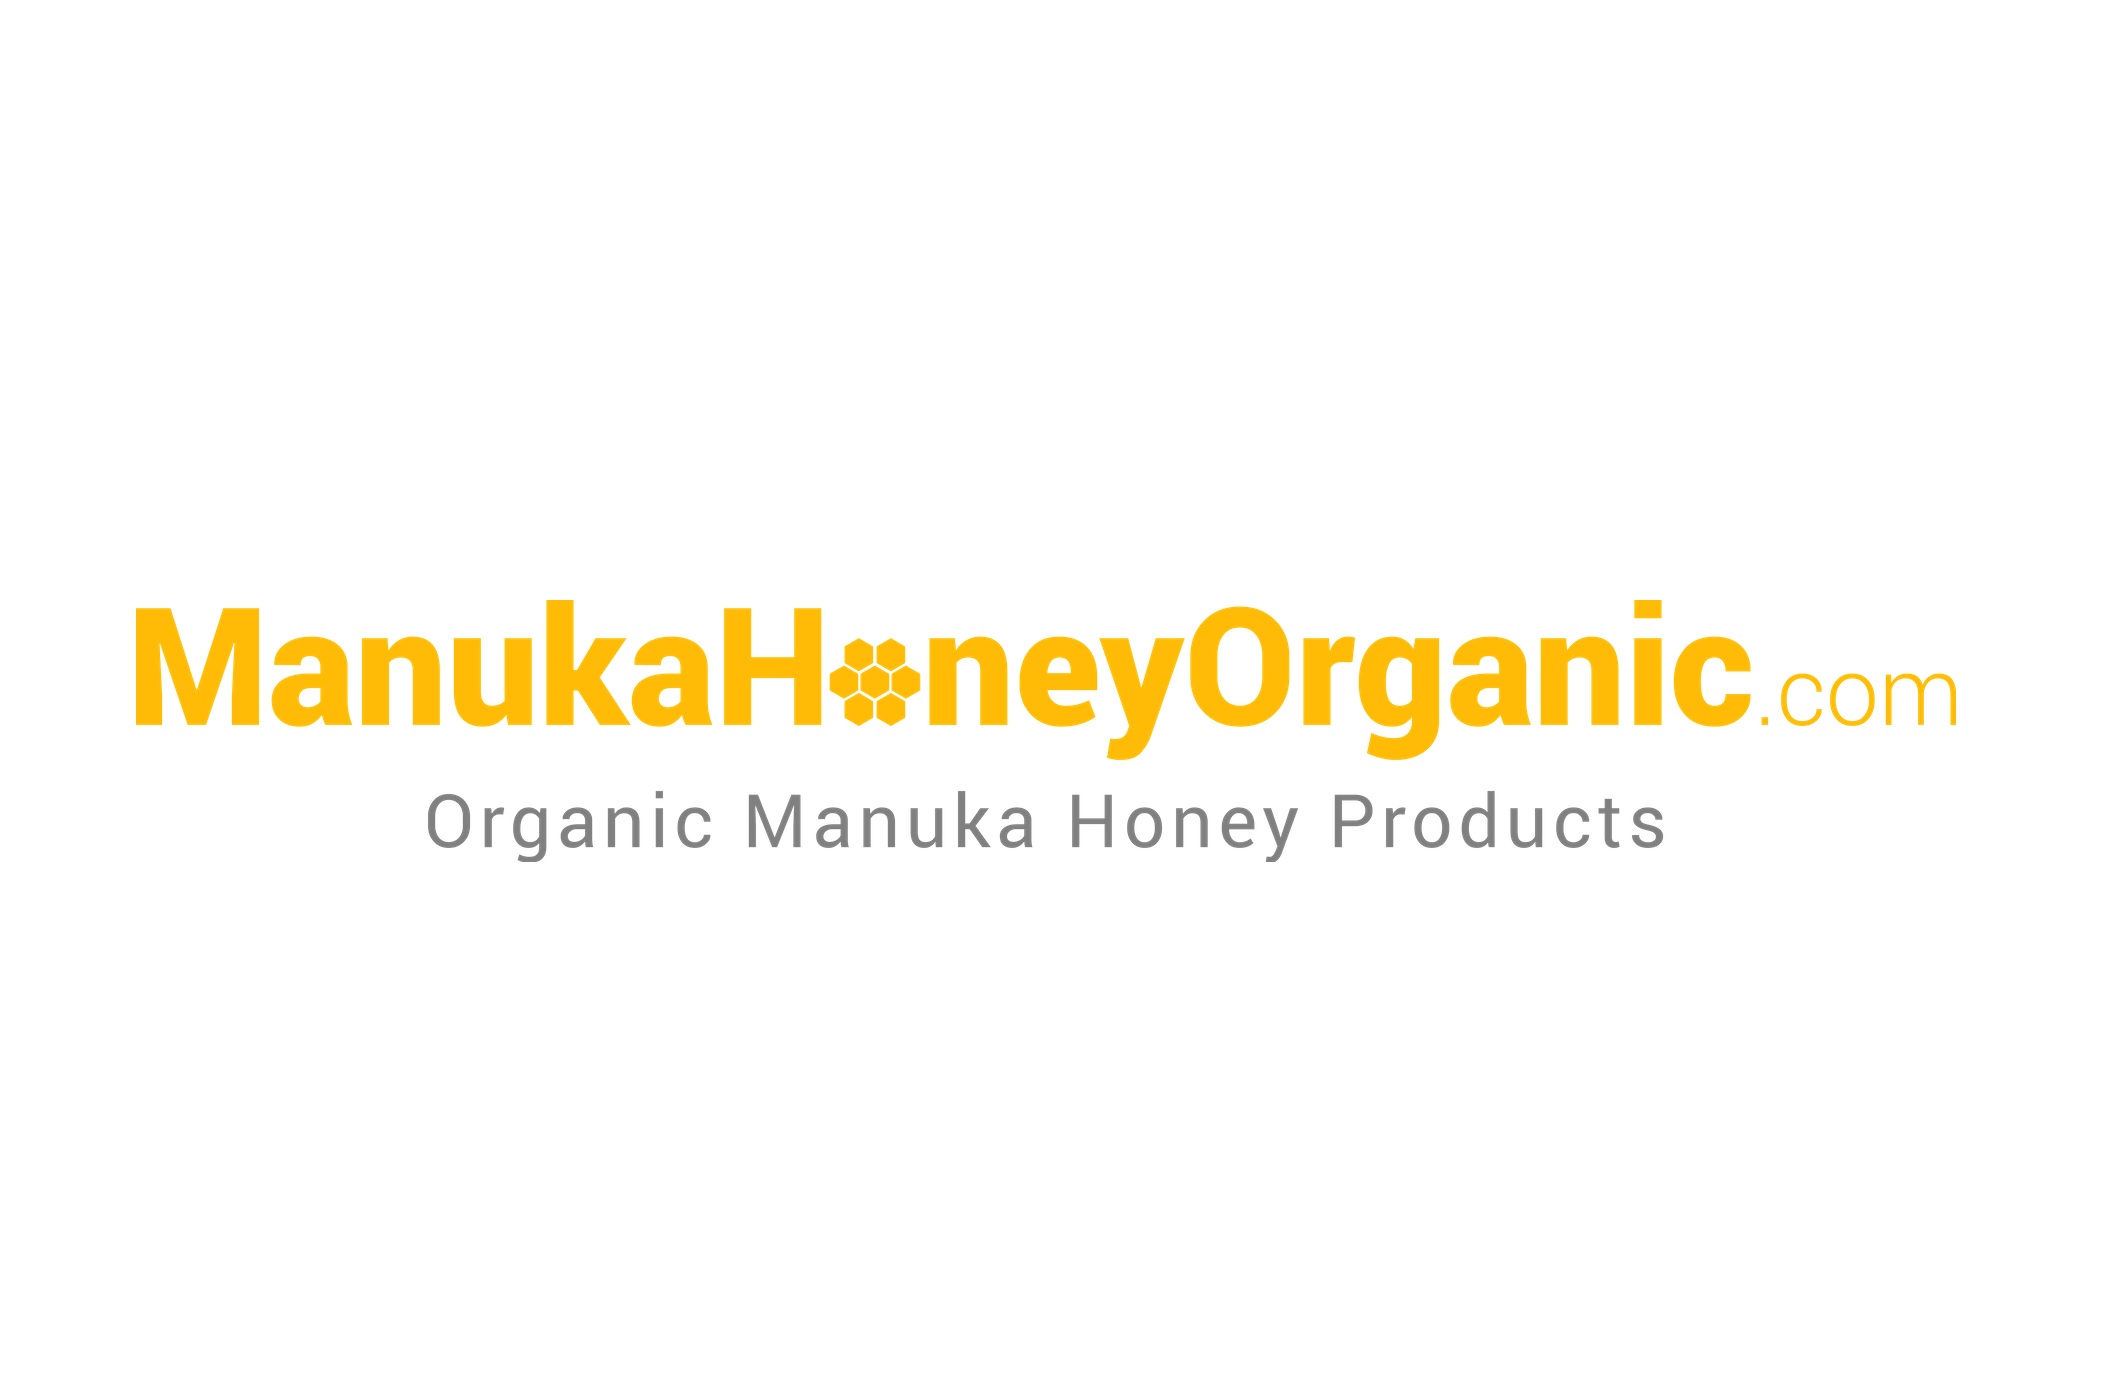 Discover the Ultimate Manuka Honey: Unmatched Quality, Taste & Value at manukahoneyorganic.com!